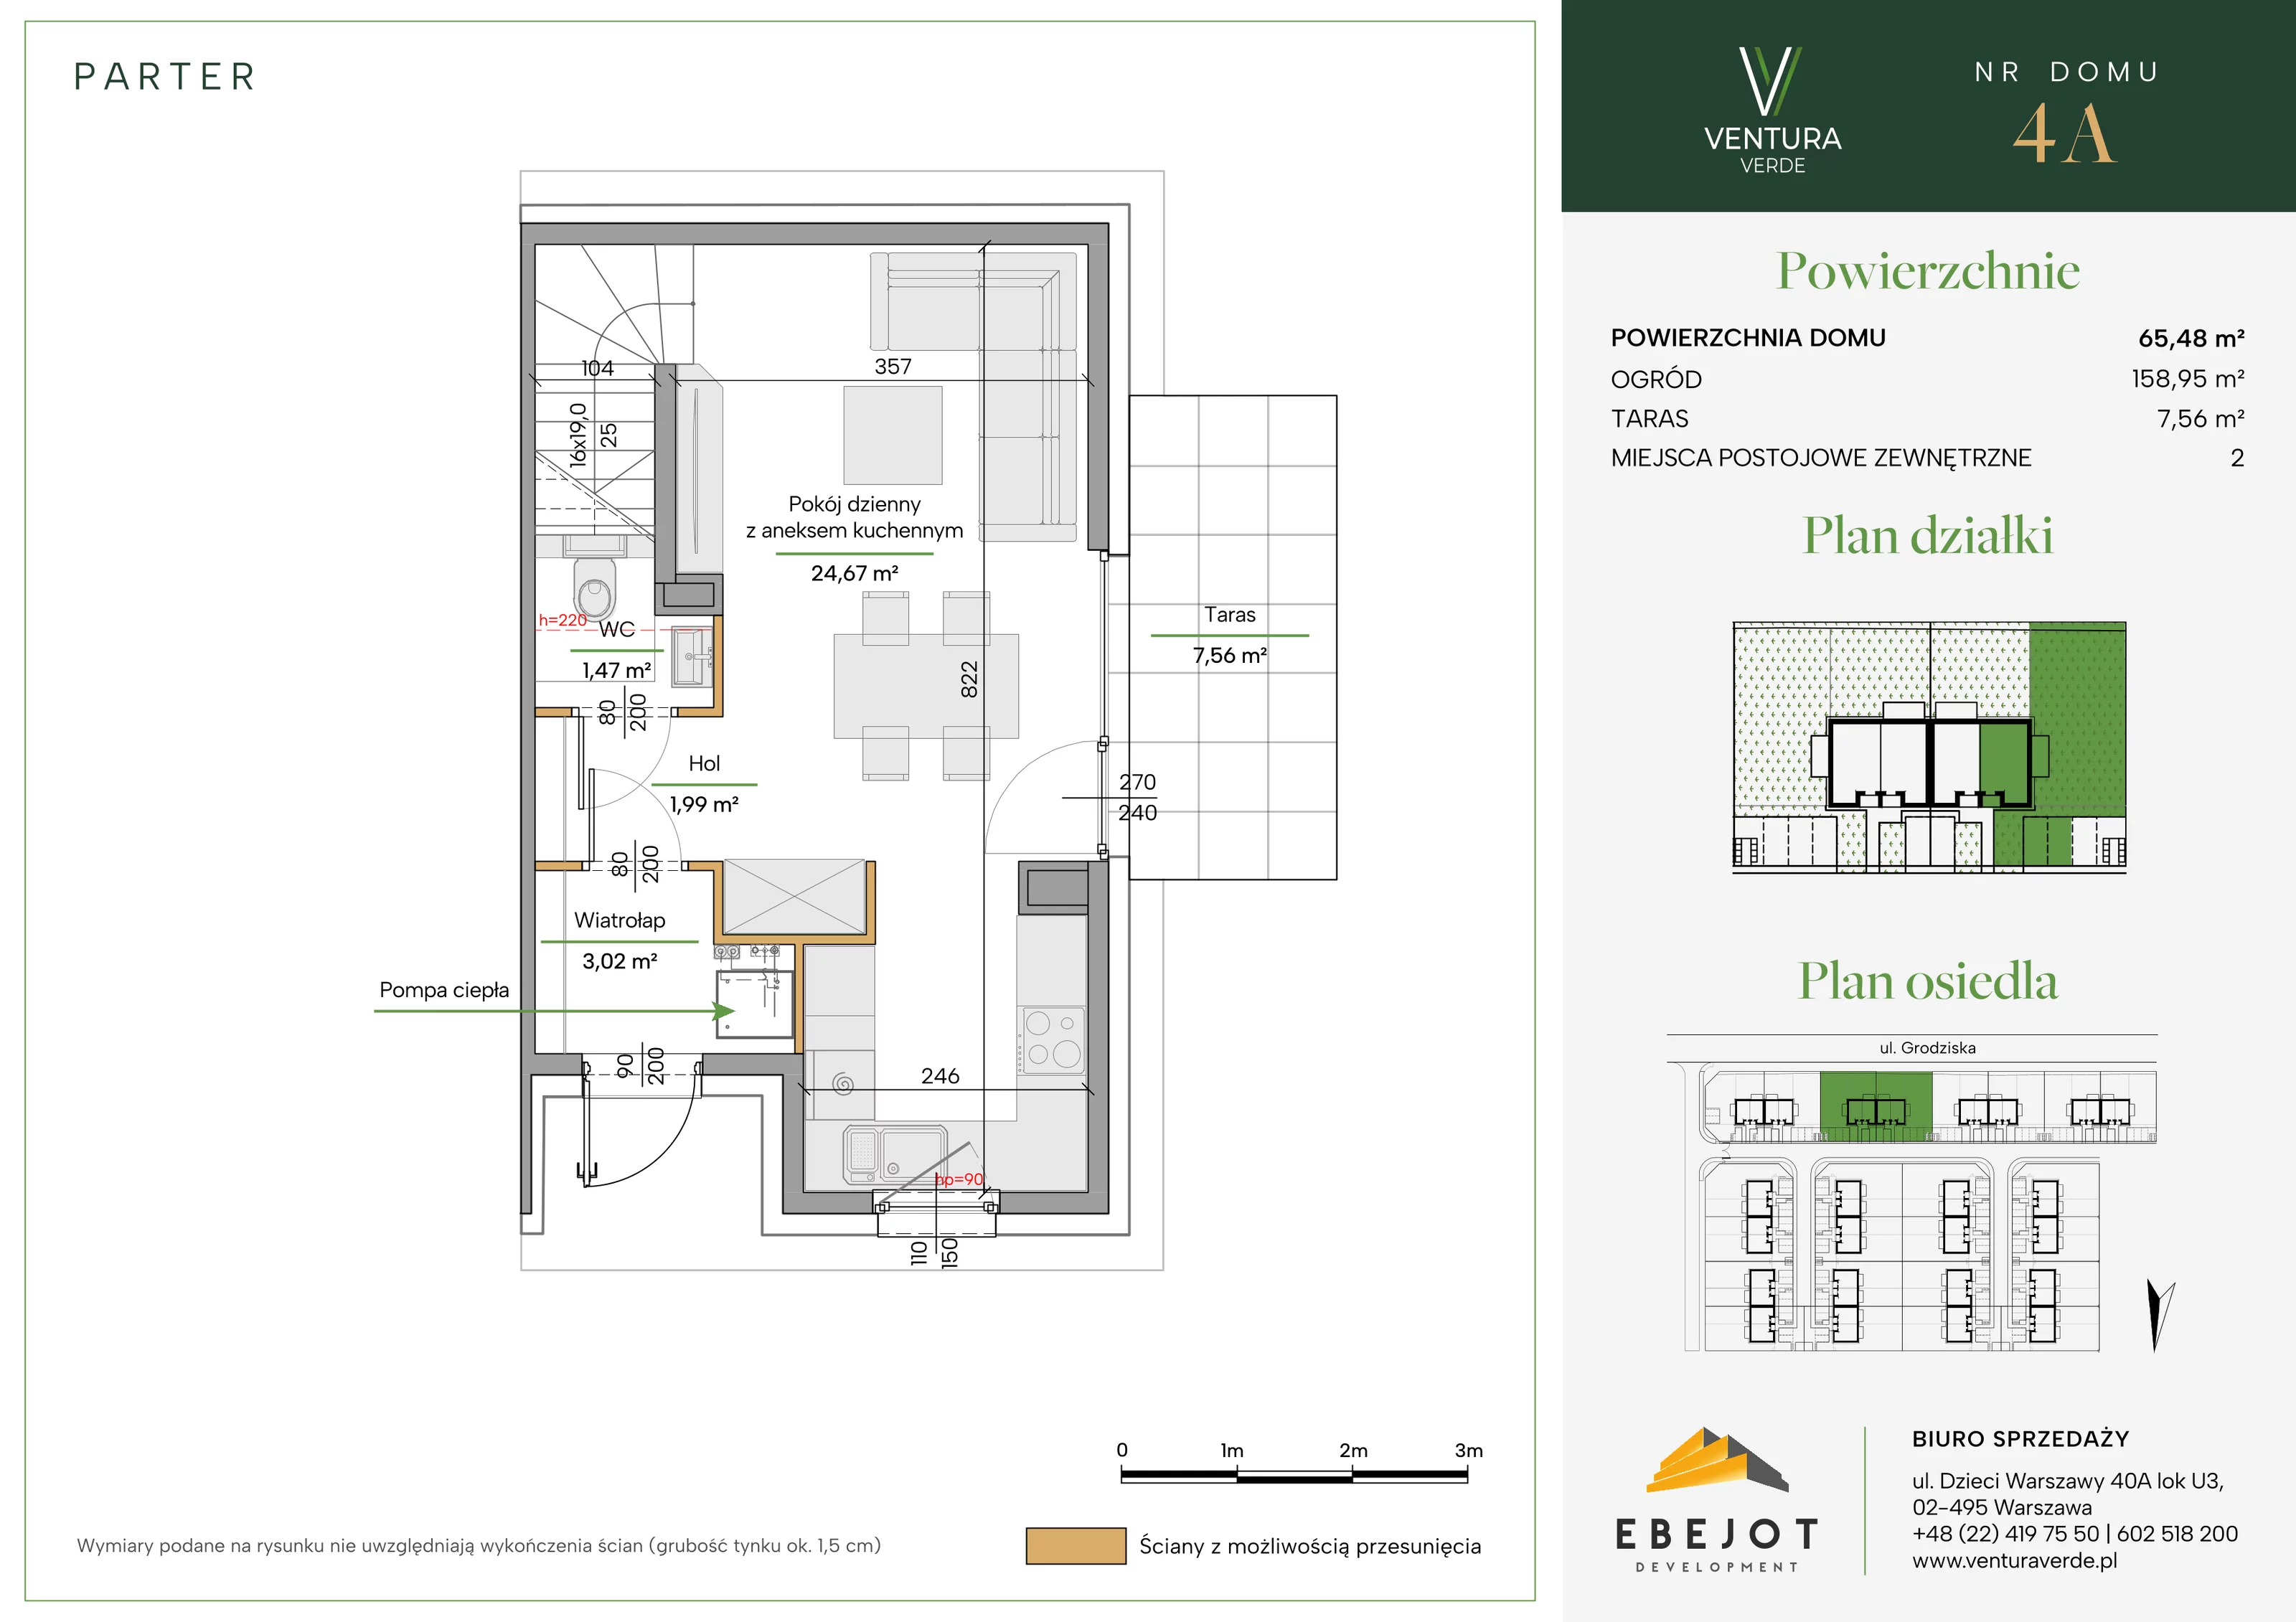 Dom 65,48 m², oferta nr 4A, Ventura Verde II, Stara Wieś, ul. Grodziska